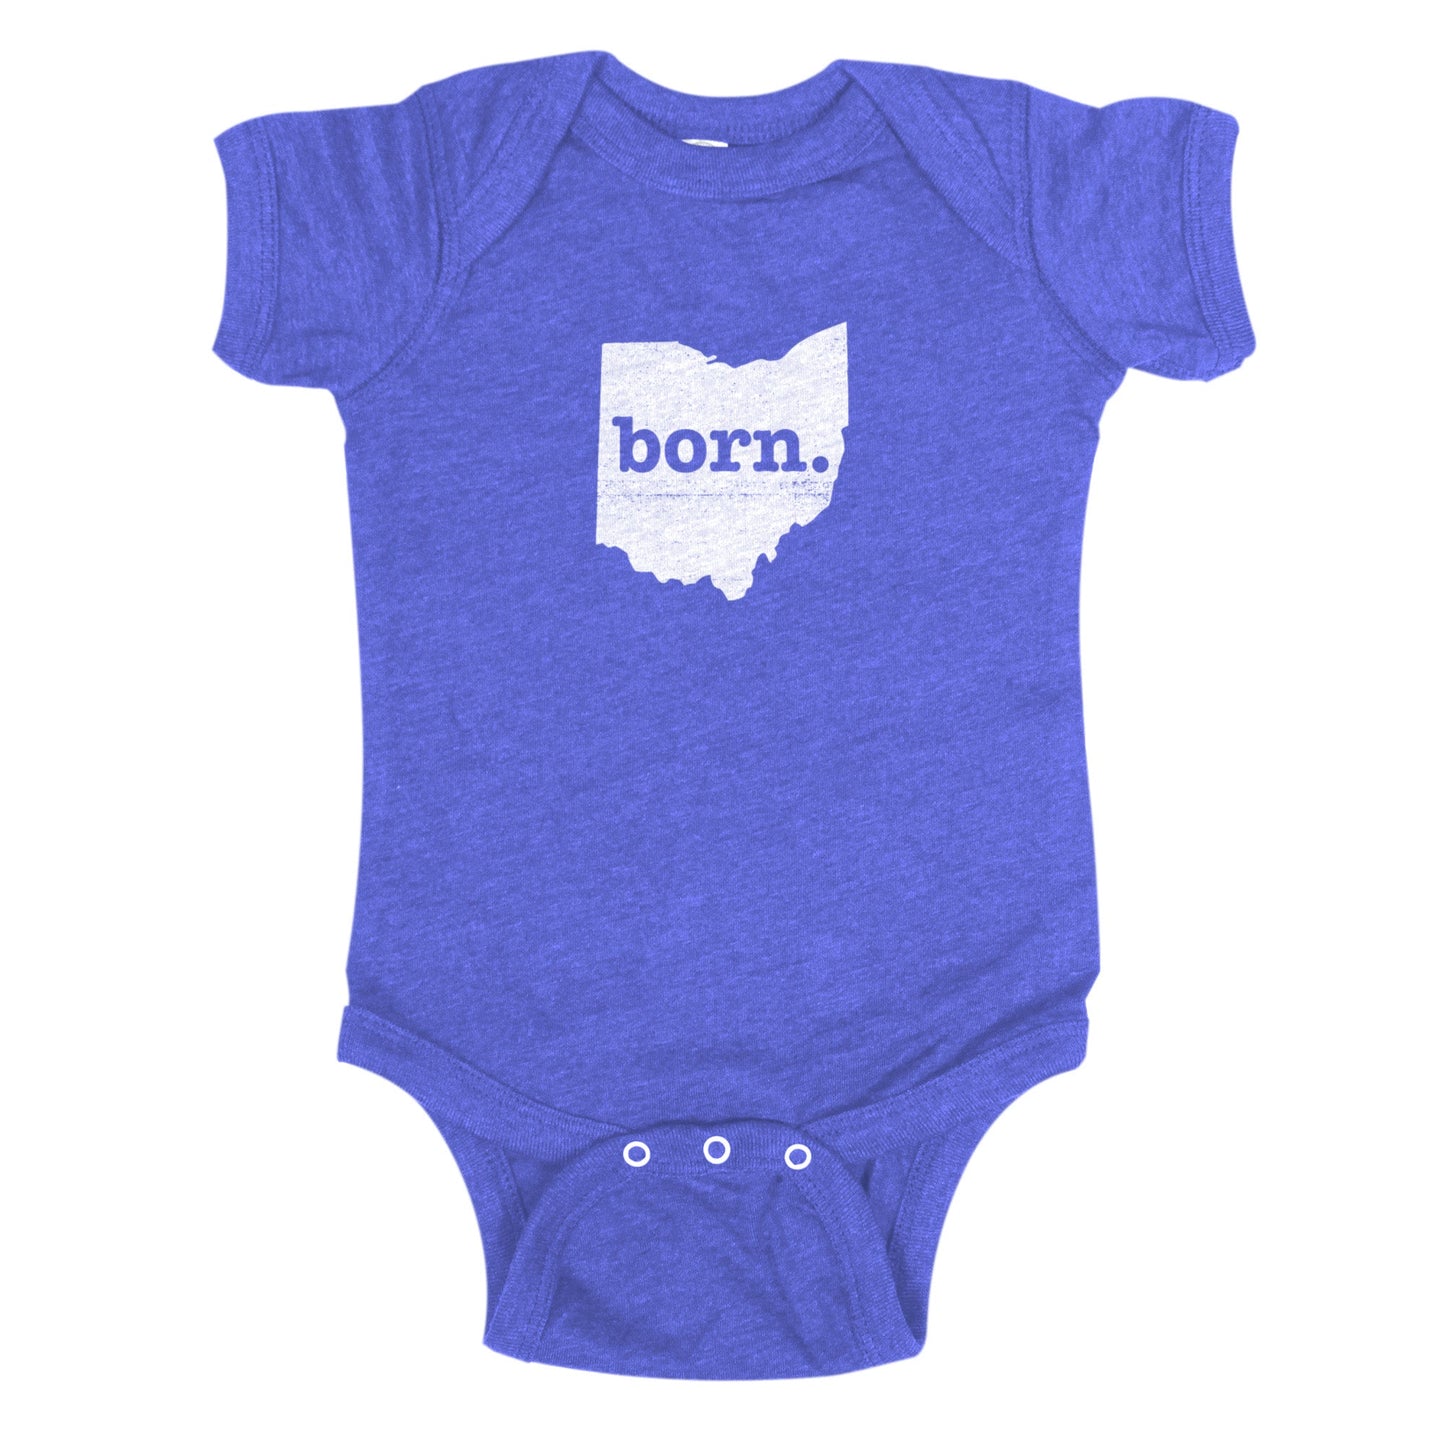 born. Baby Bodysuit - Ohio